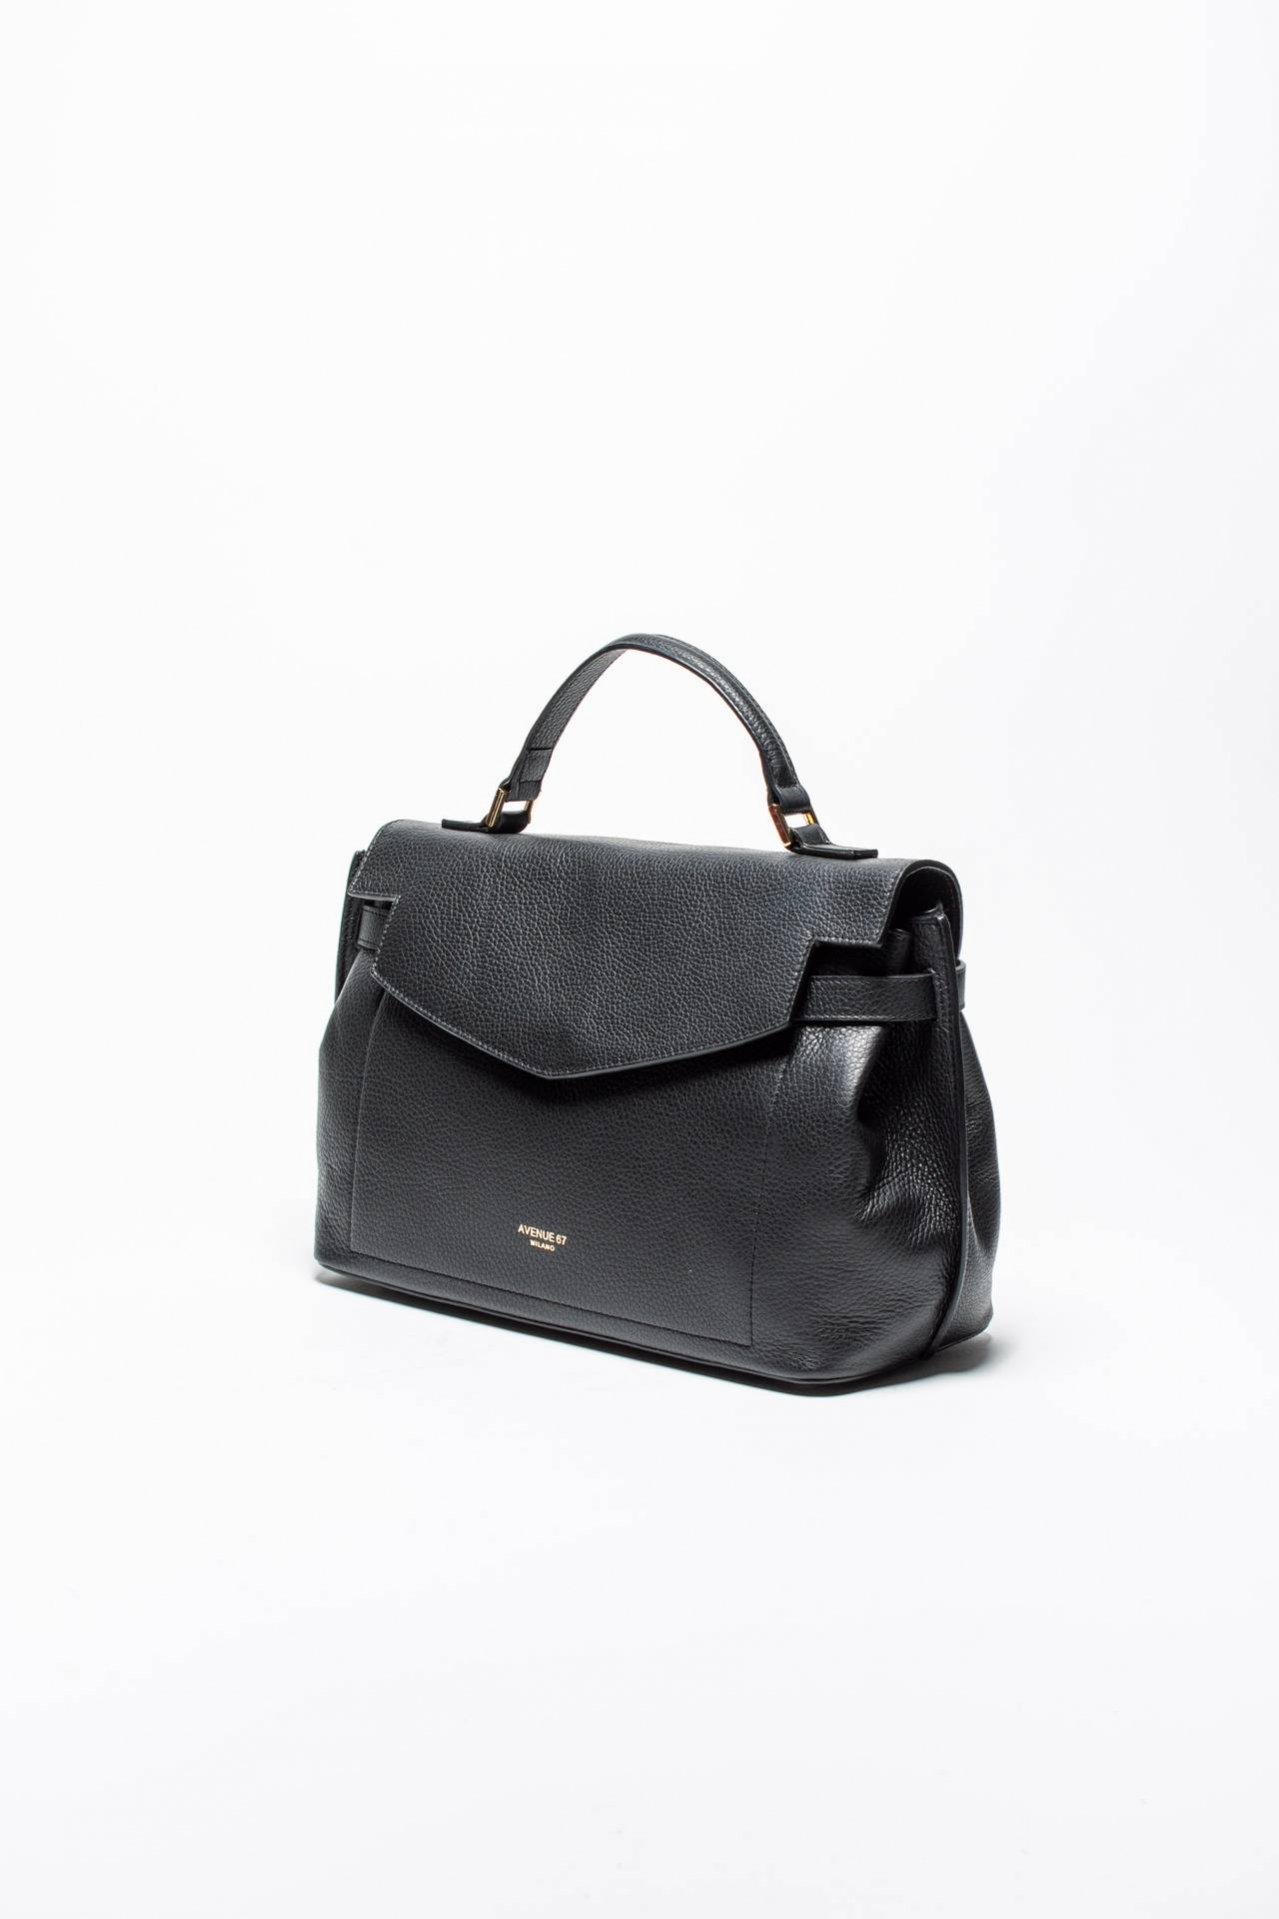 DOLLY black leather bag